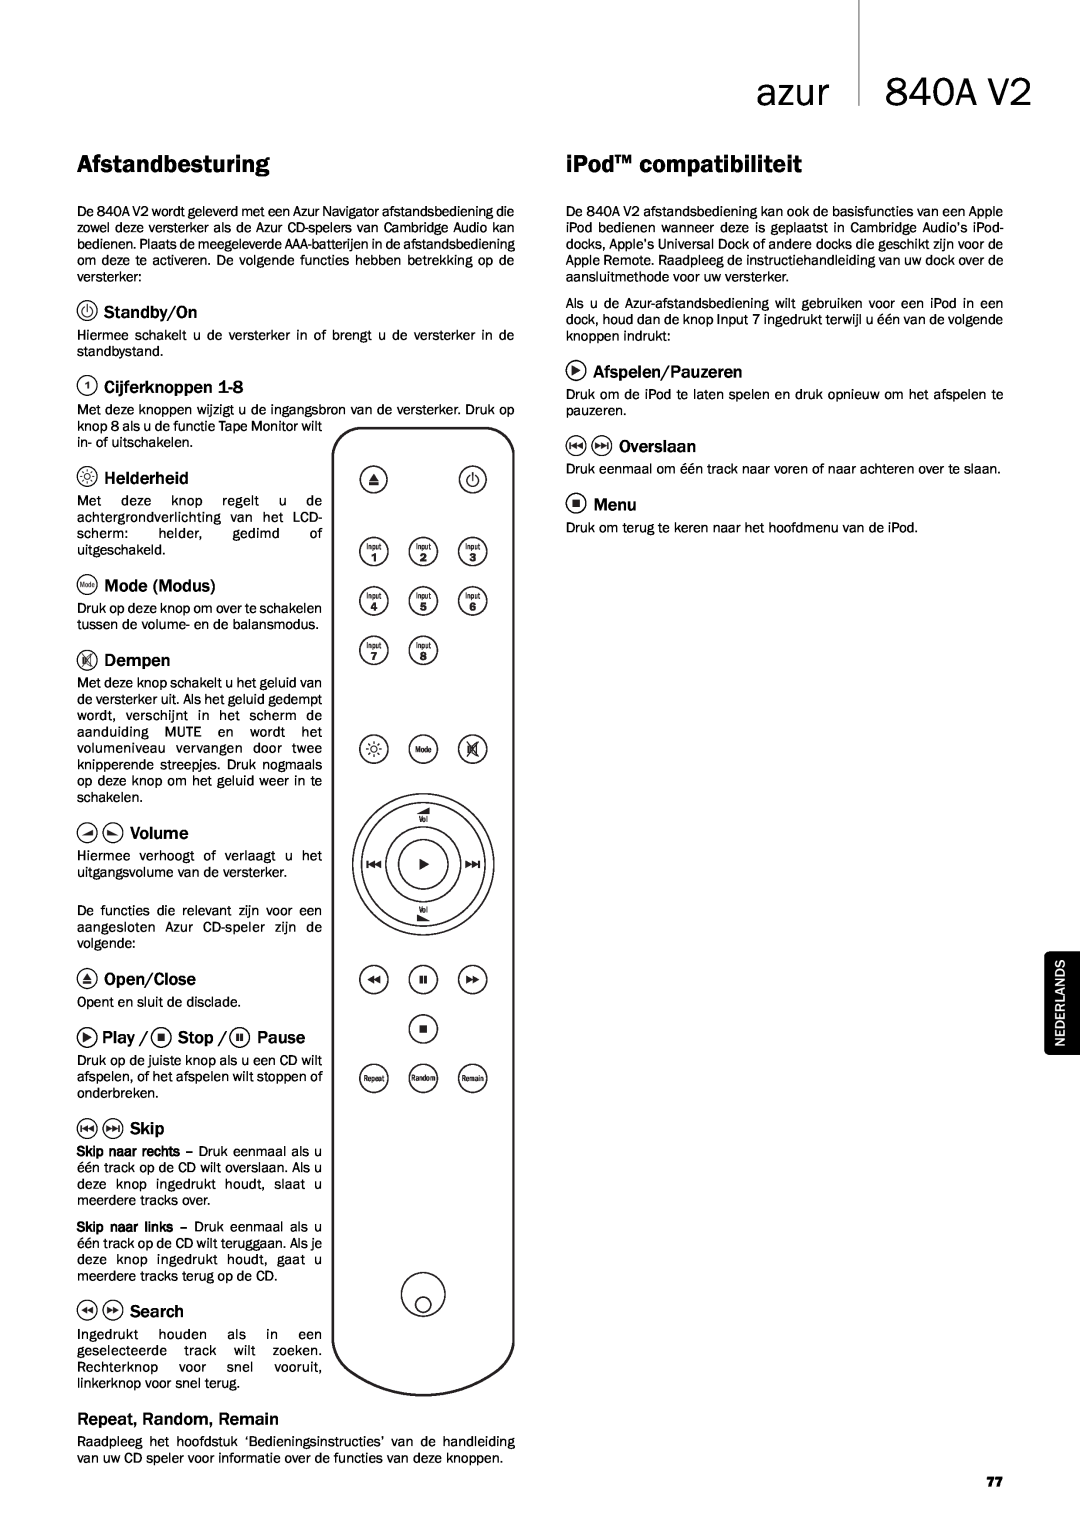 Cambridge Audio 840A V2 manual Afstandbesturing, iPodTM compatibiliteit, azur 840A 